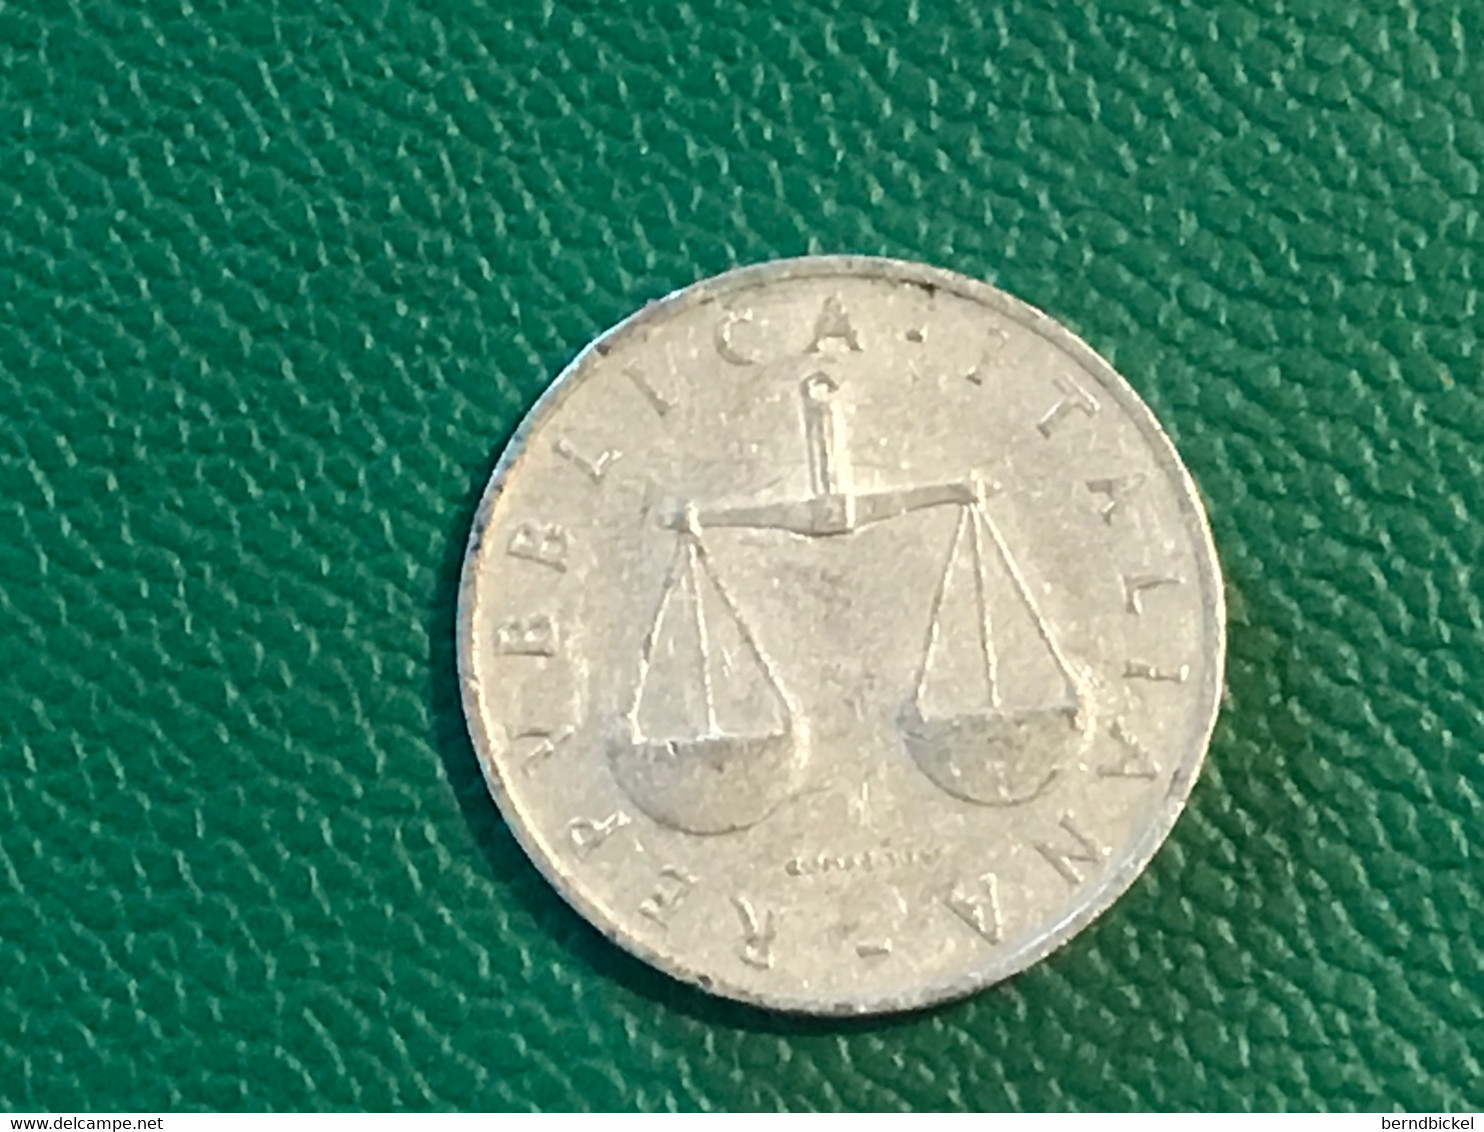 Münze Münzen Umlaufmünze Italien 1 Lira 1955 - 1 Lira